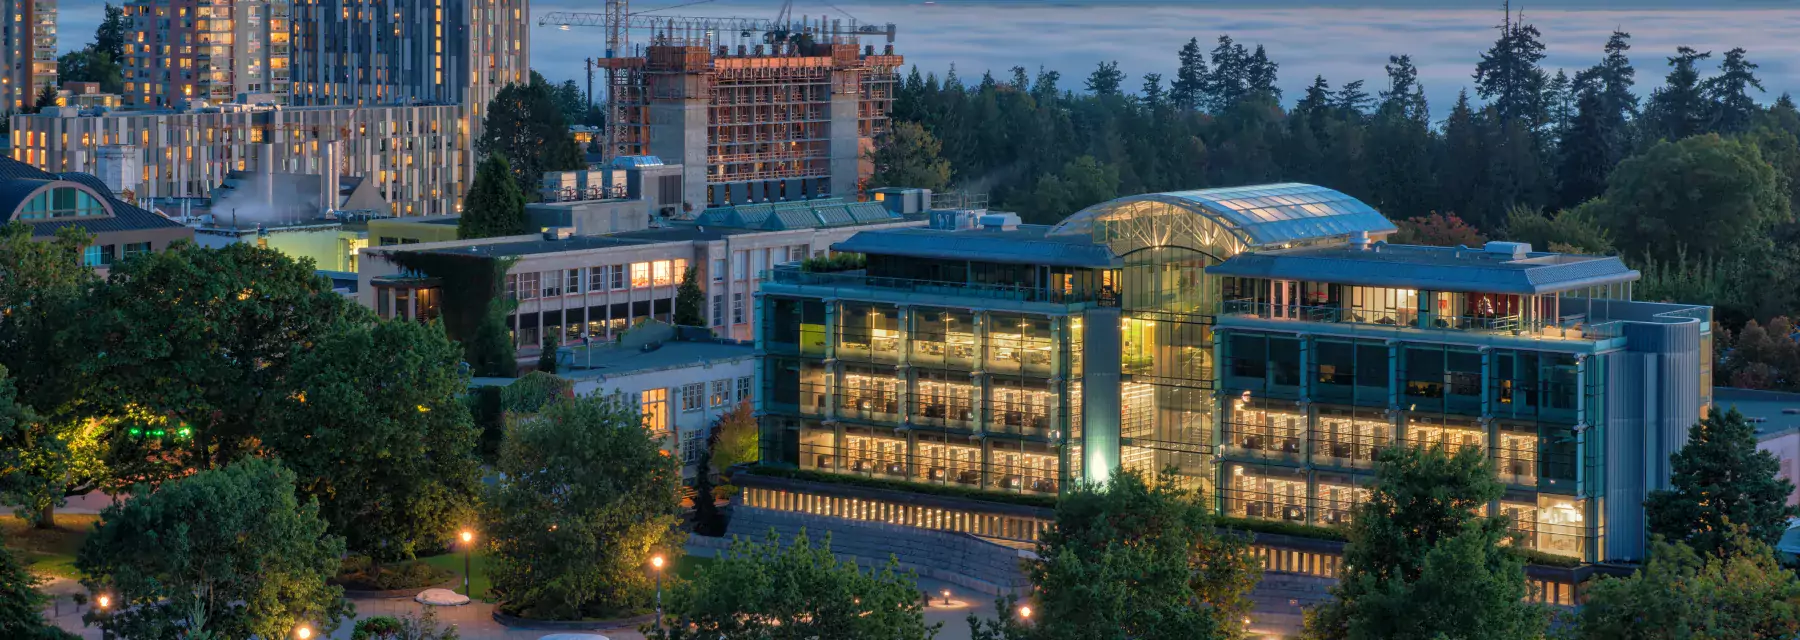 UBC Vancouver Campus